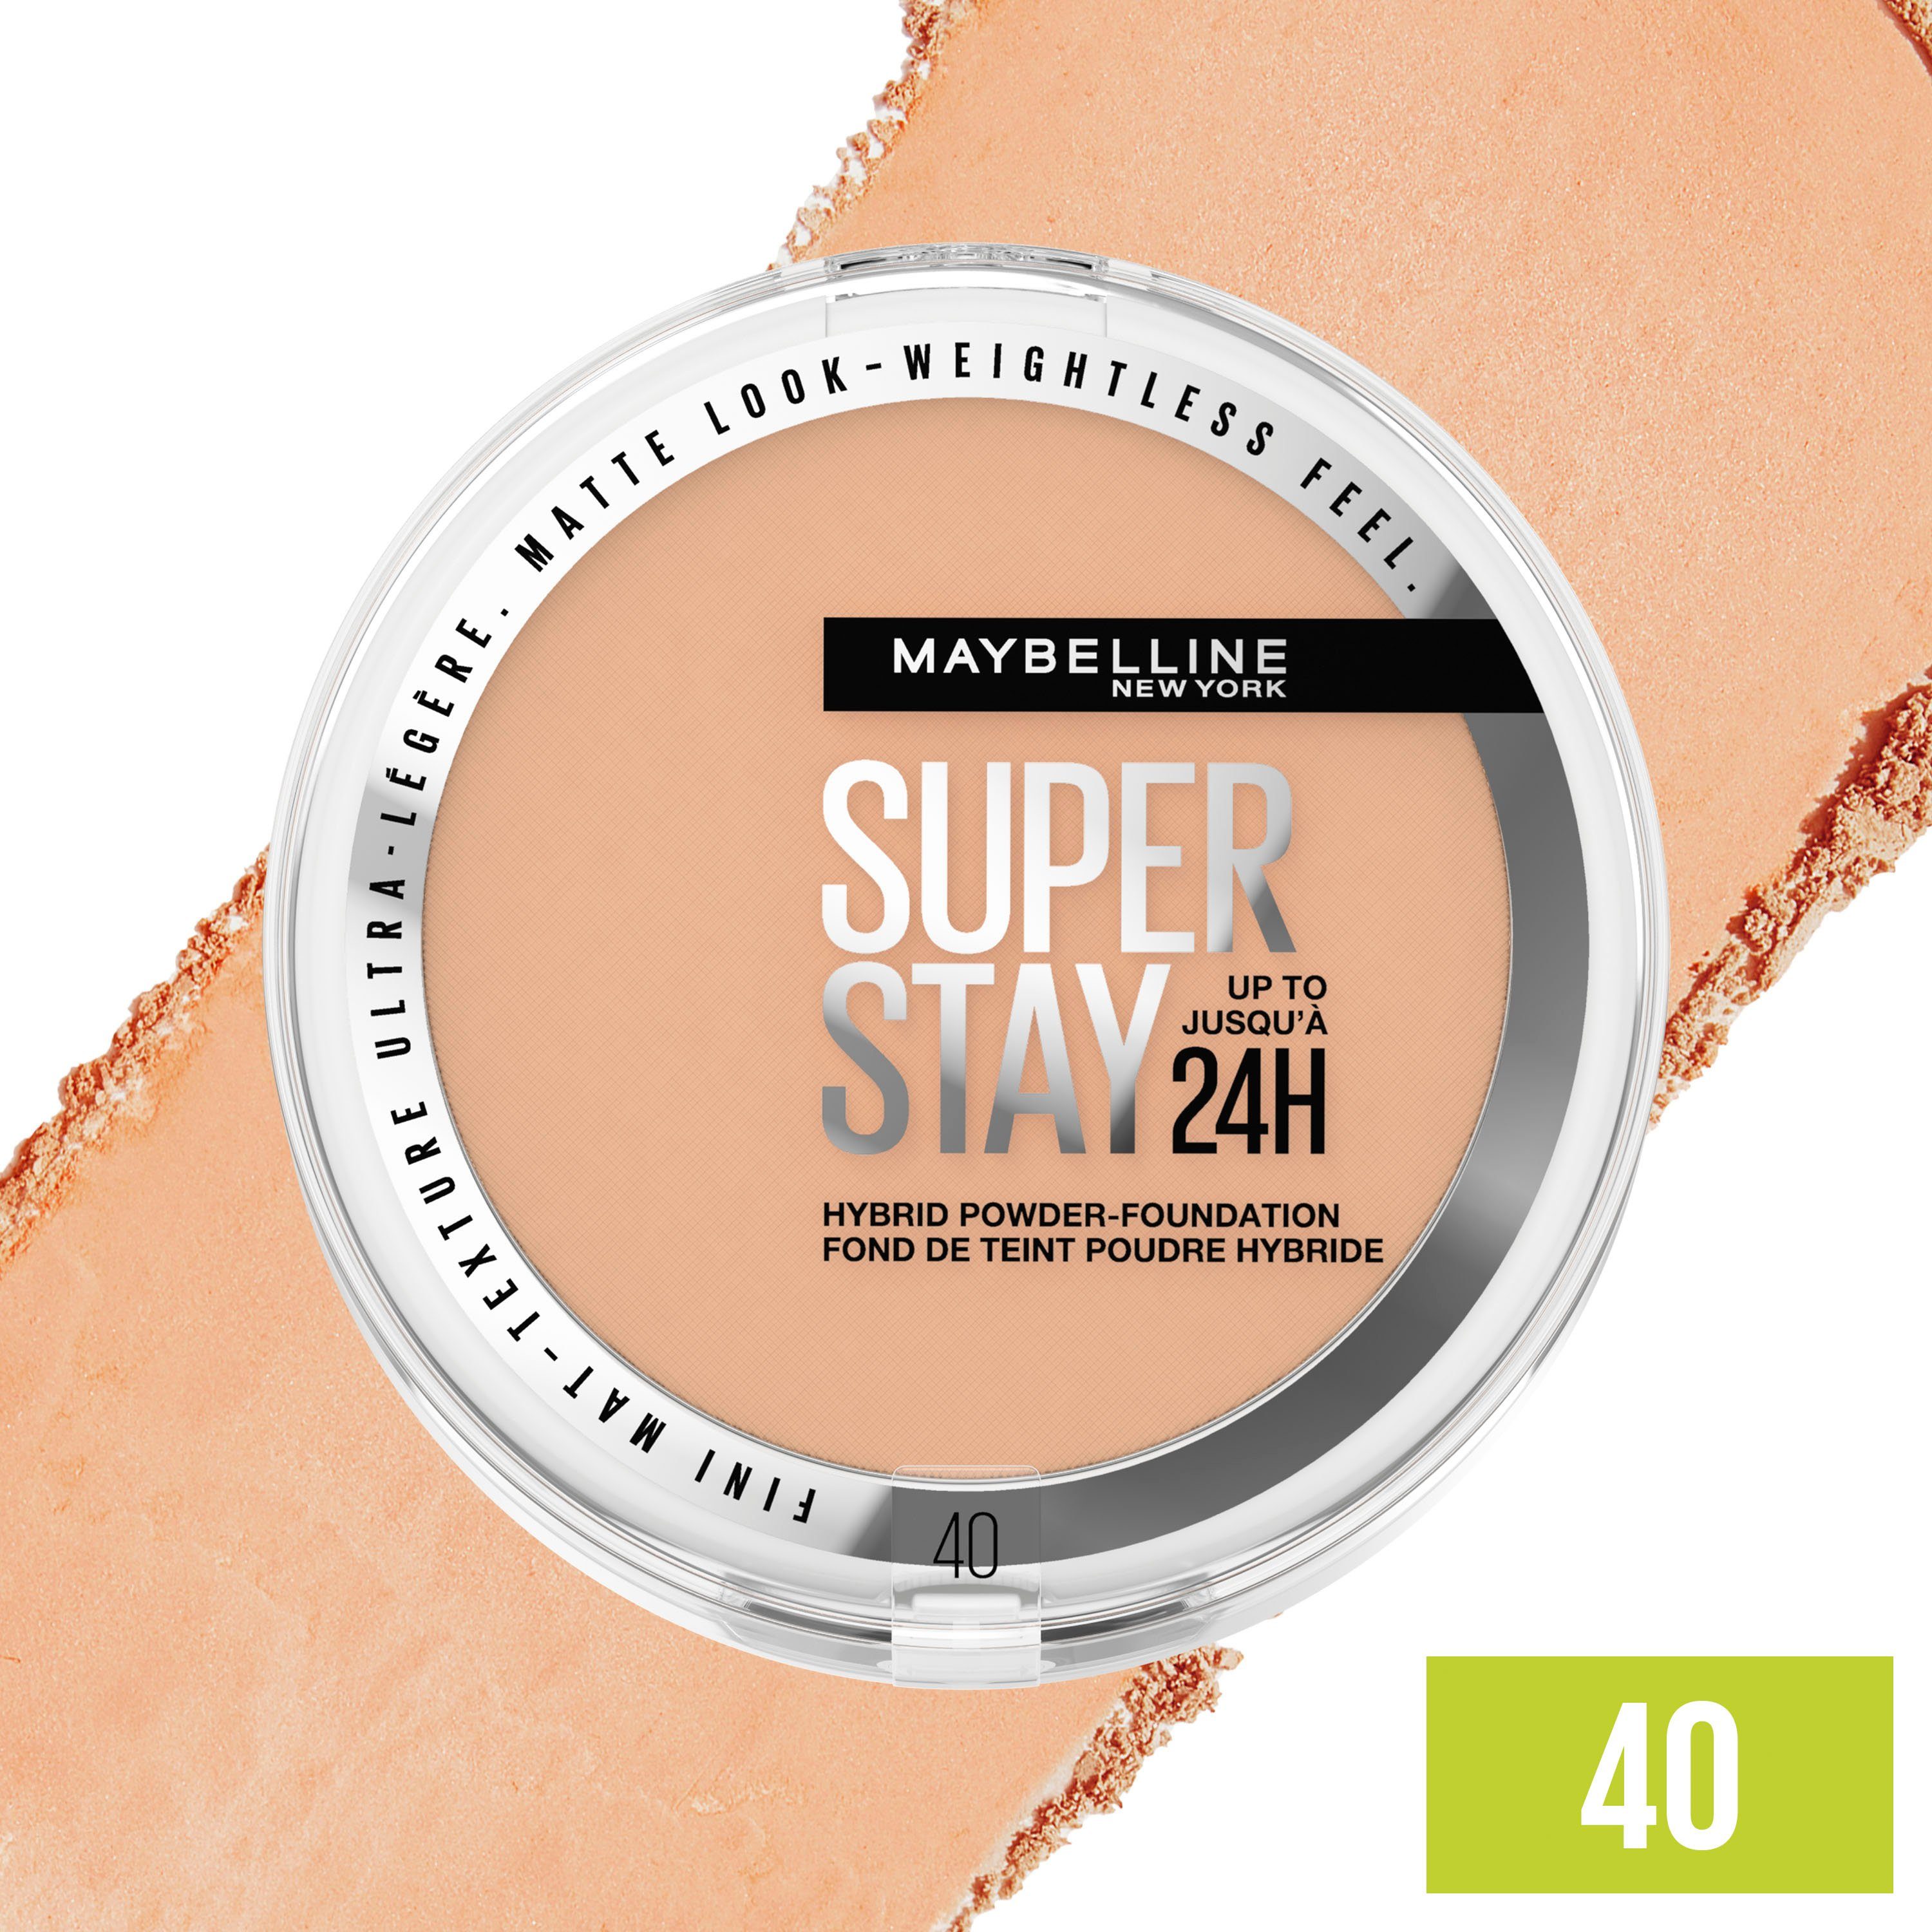 MAYBELLINE NEW YORK Foundation Hybrides Puder Make-Up York Super New Maybelline Stay